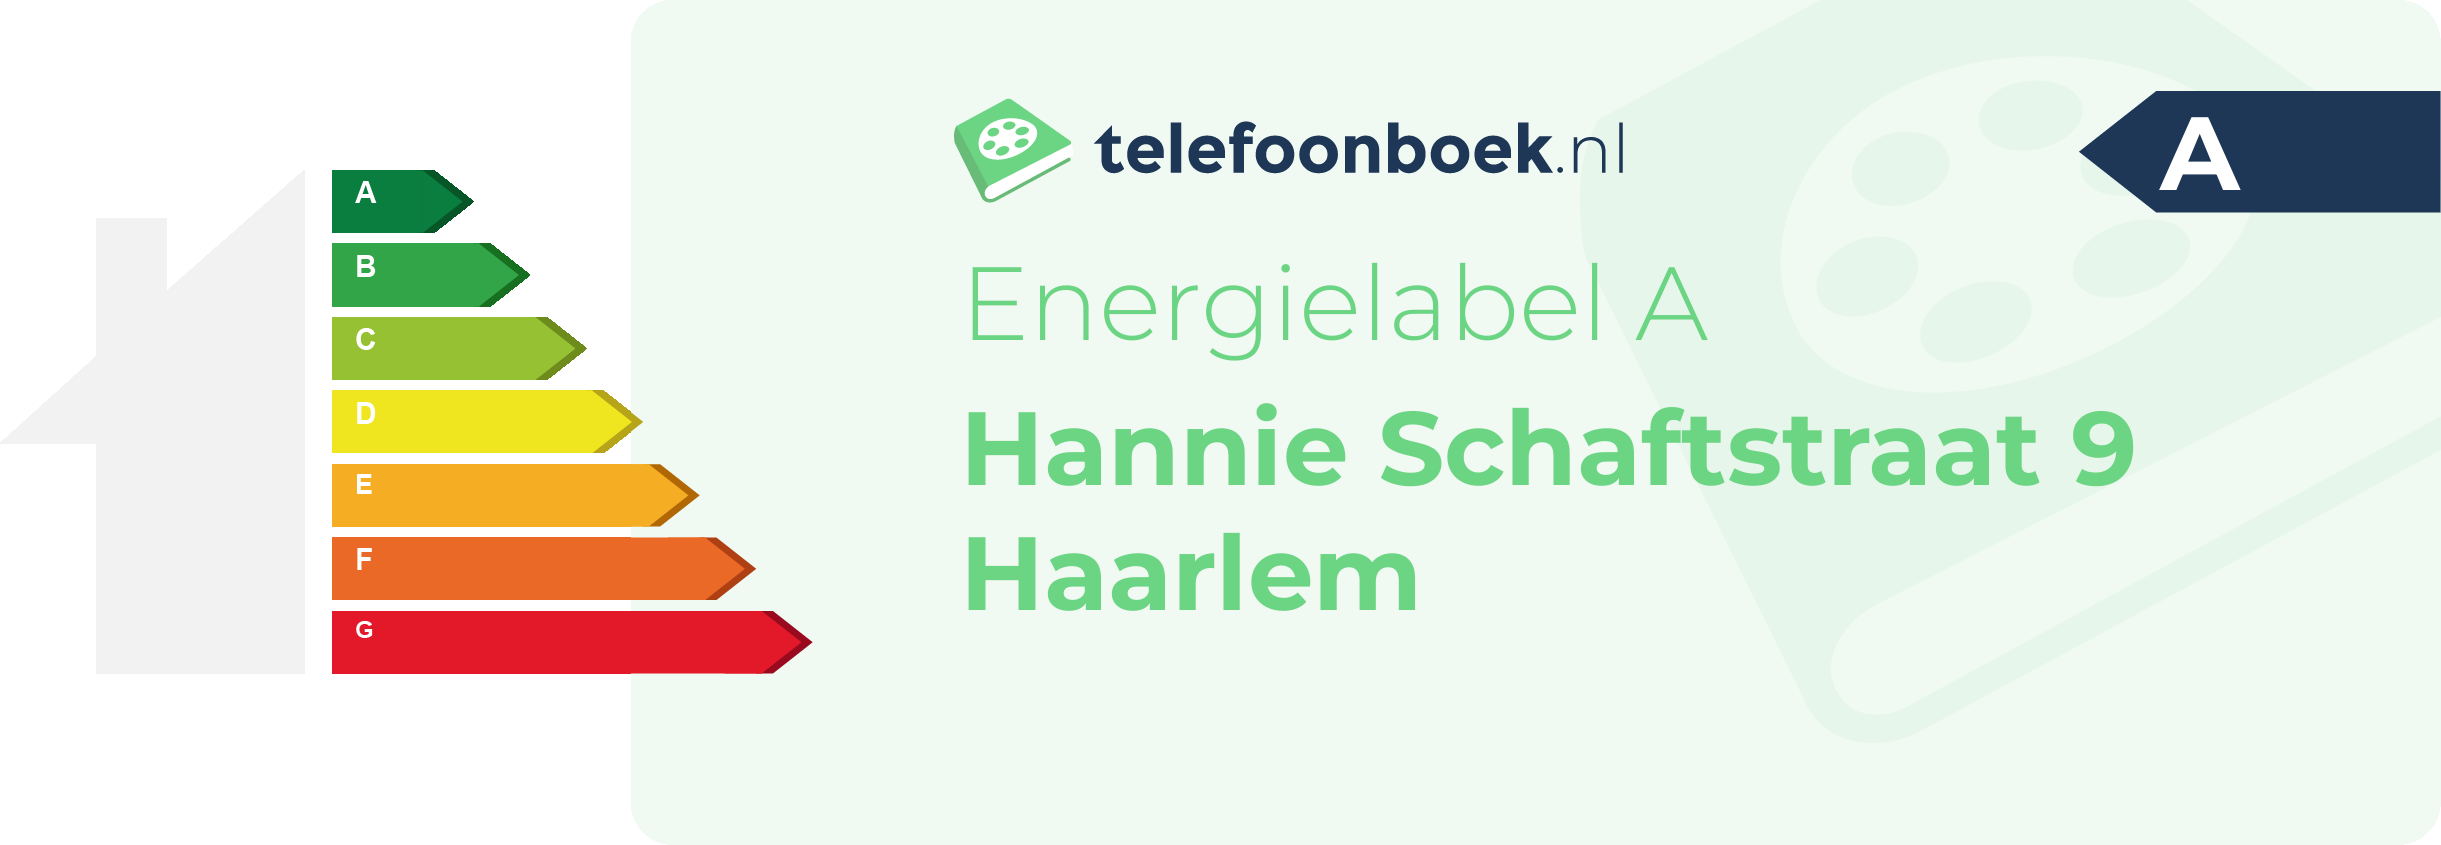 Energielabel Hannie Schaftstraat 9 Haarlem